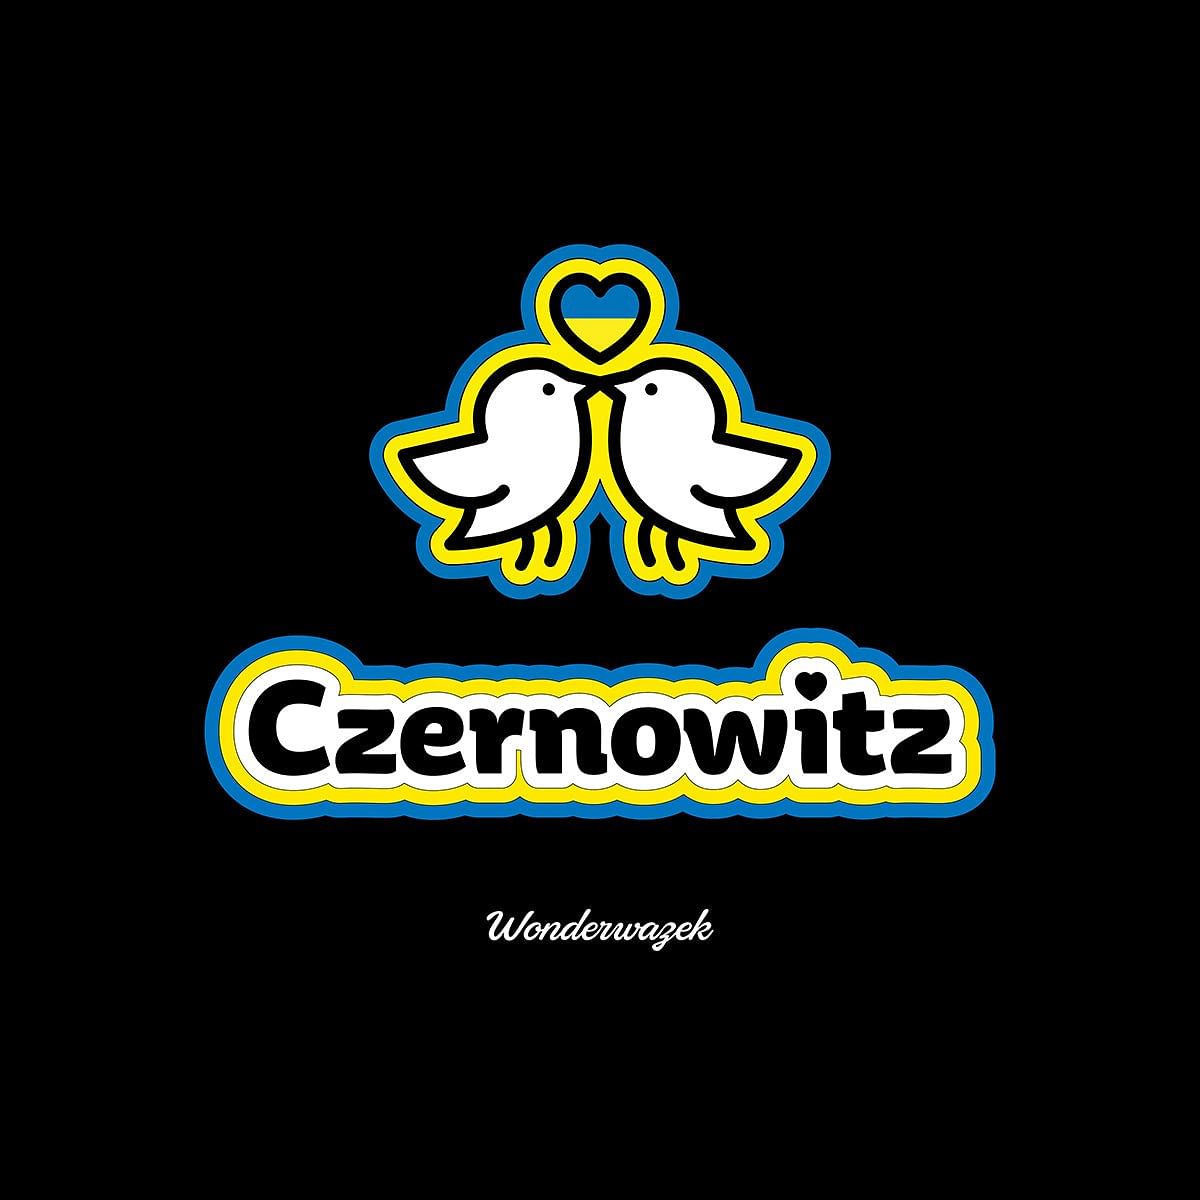 Einkaufstasche • Edition Friedenswazek – Czernowitz - Wonderwazek